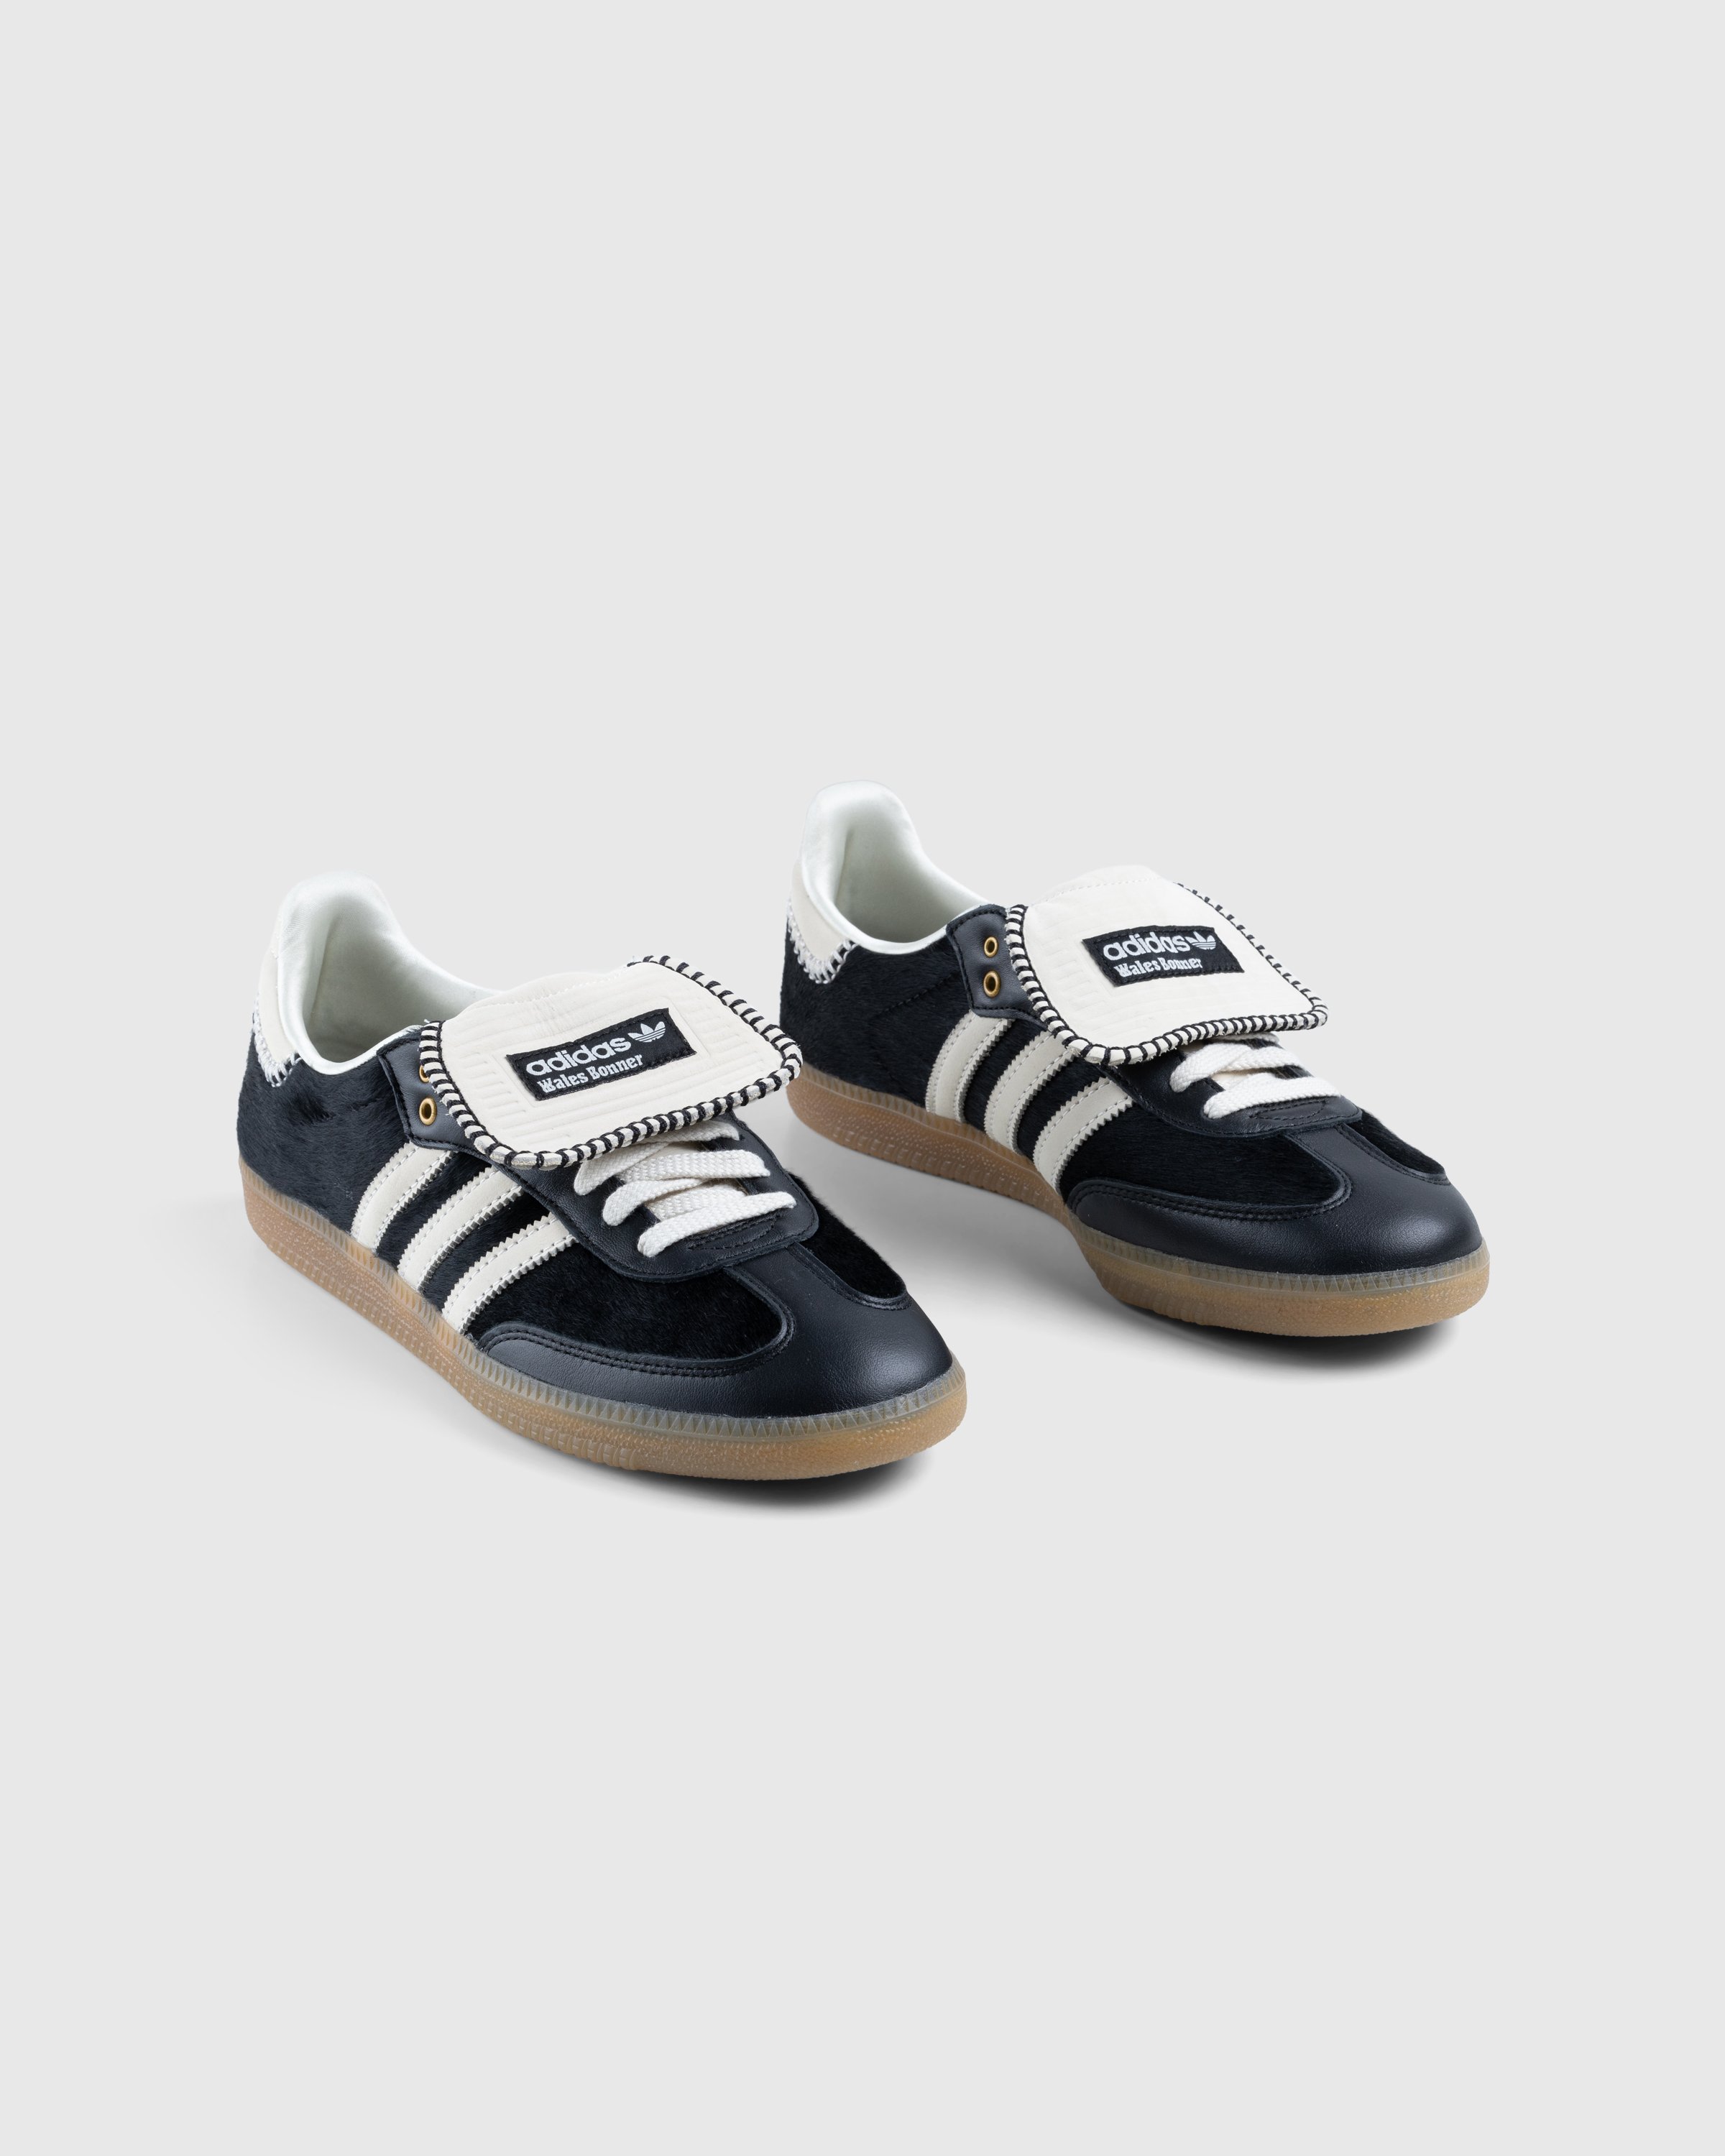 Adidas x Wales Bonner - WB PONY TONAL SAMBA CBLACK/CWHITE/CWHITE - Footwear - Black - Image 3